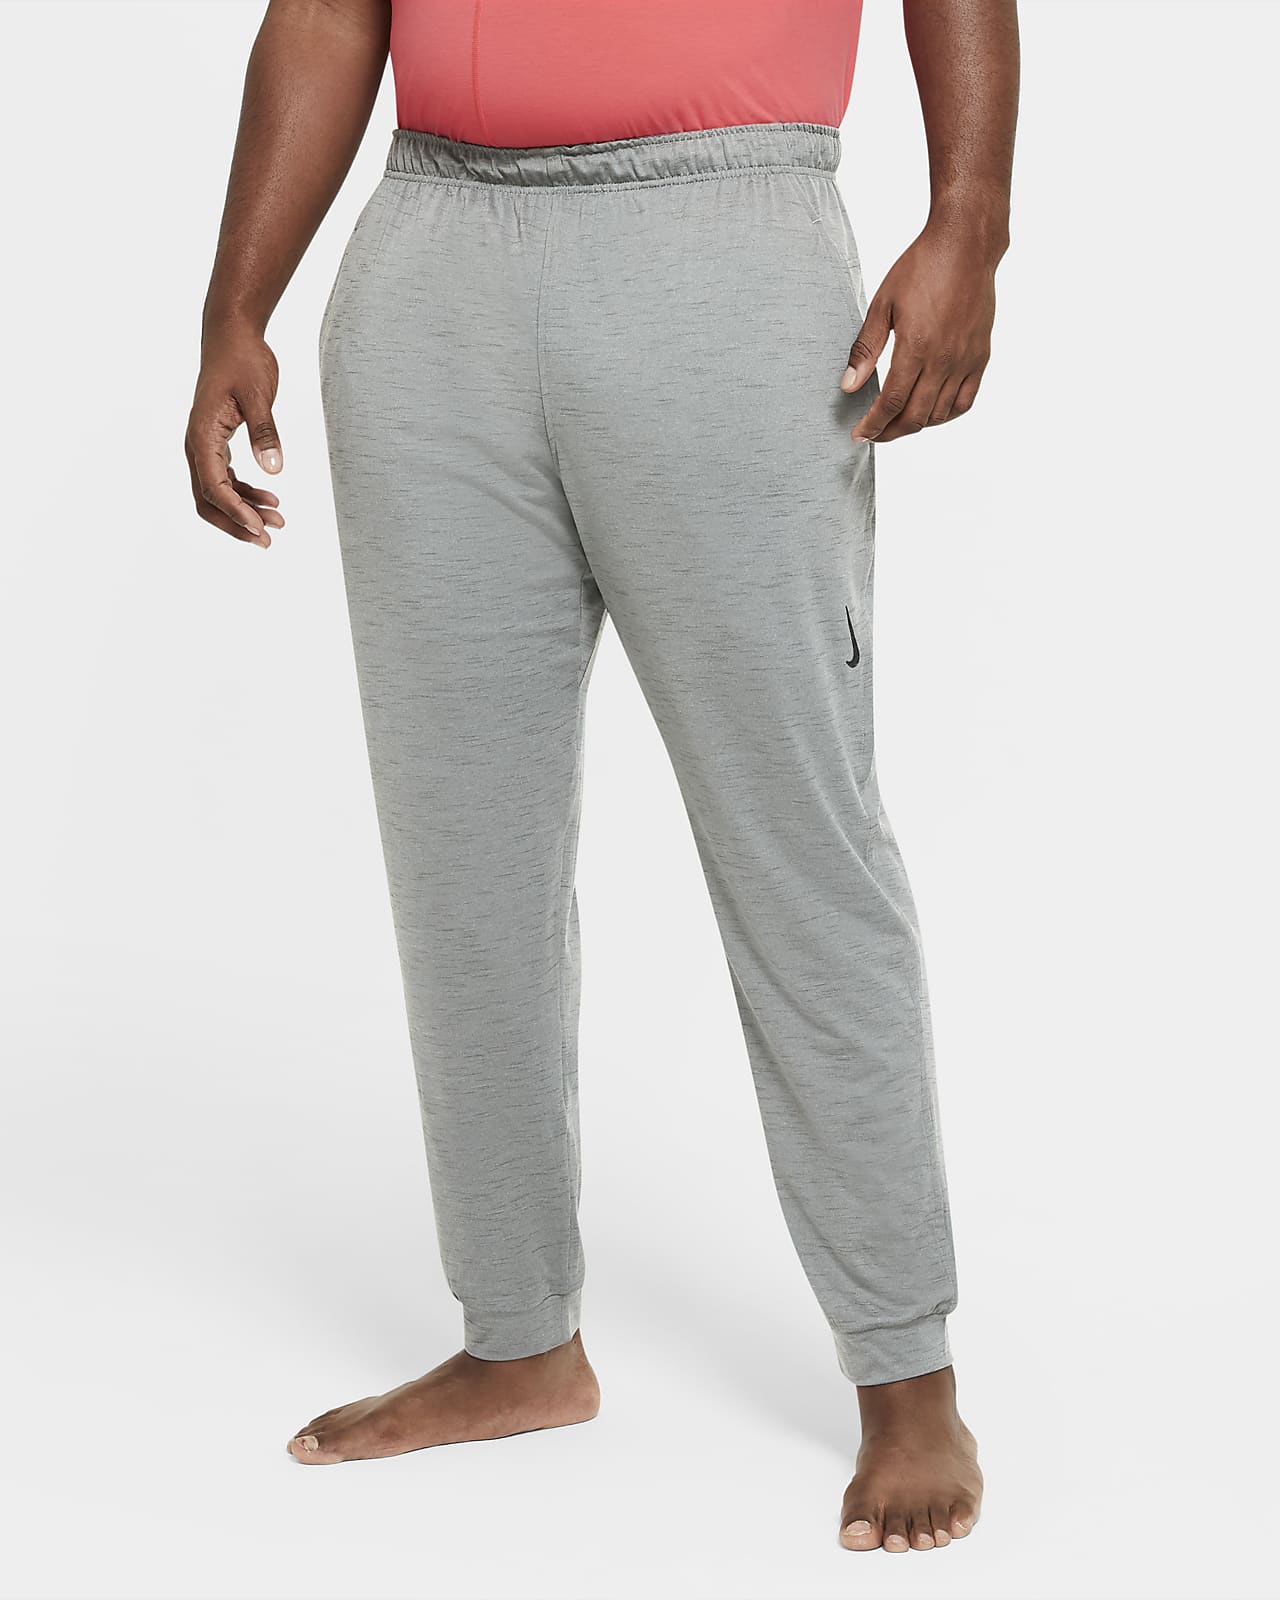 Nike Yoga Men's Dri-fit Training Short Sleeve White Top Size 3xl Cz2225-100  for sale online